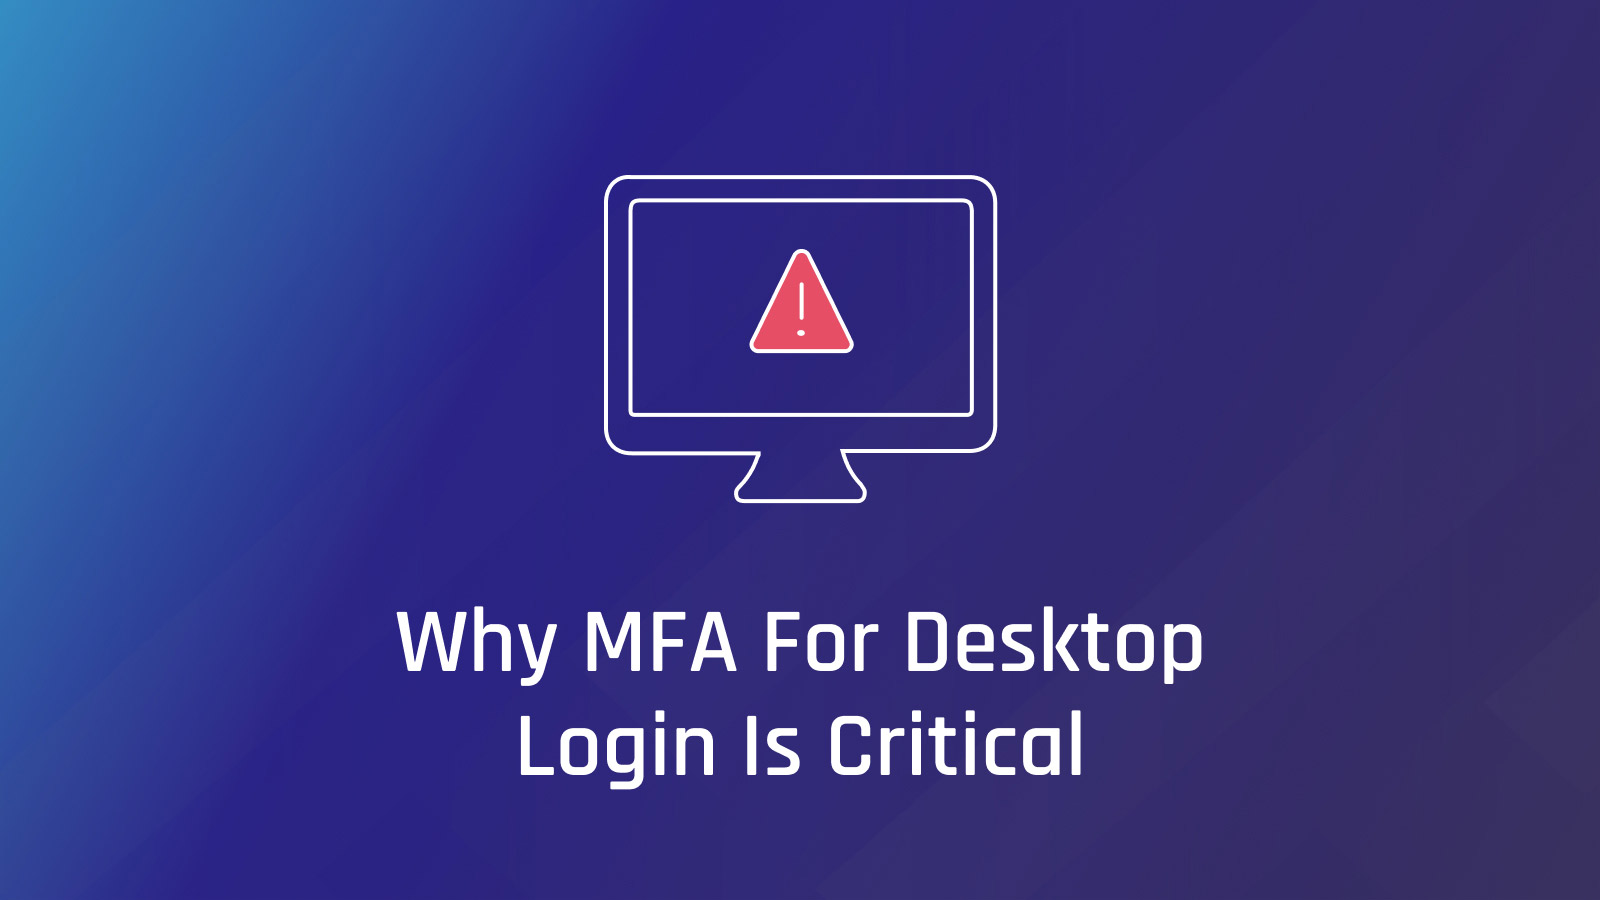 MFA-for-Desktops-Is-Critical